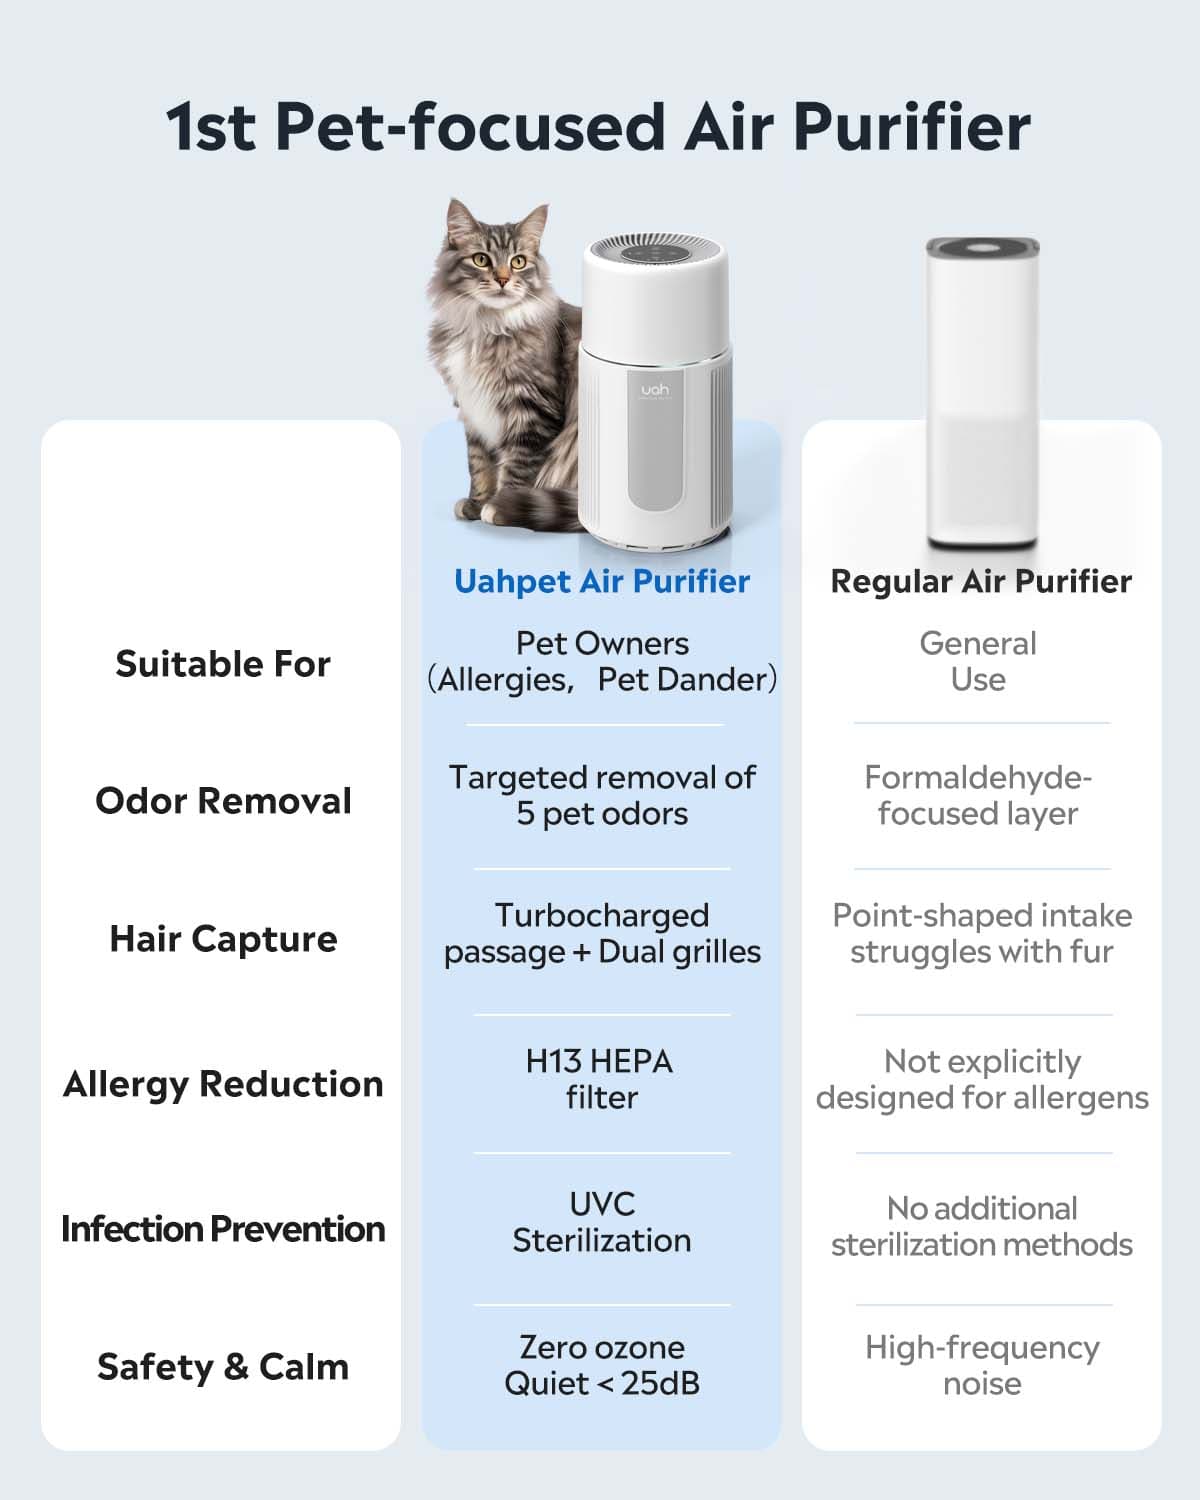 comparison between uahpet's pet air purifier that designed for pet lovers and regular pet air purifier